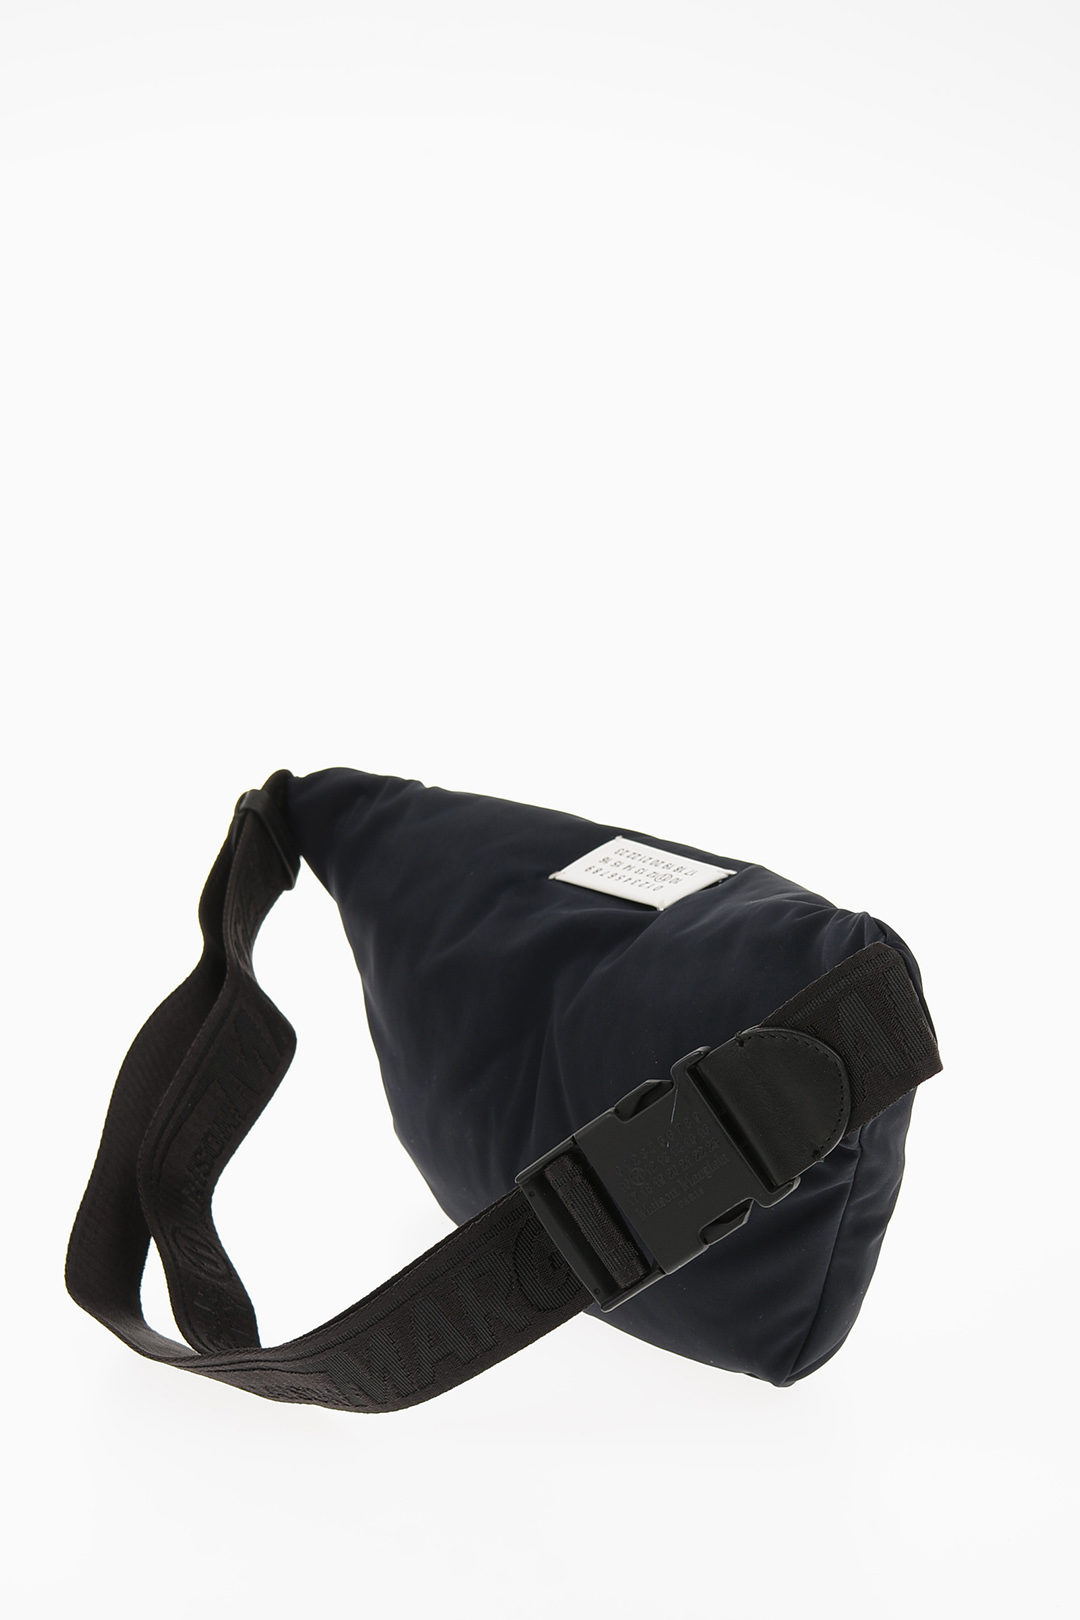 MM11 Fabric Bum Bag